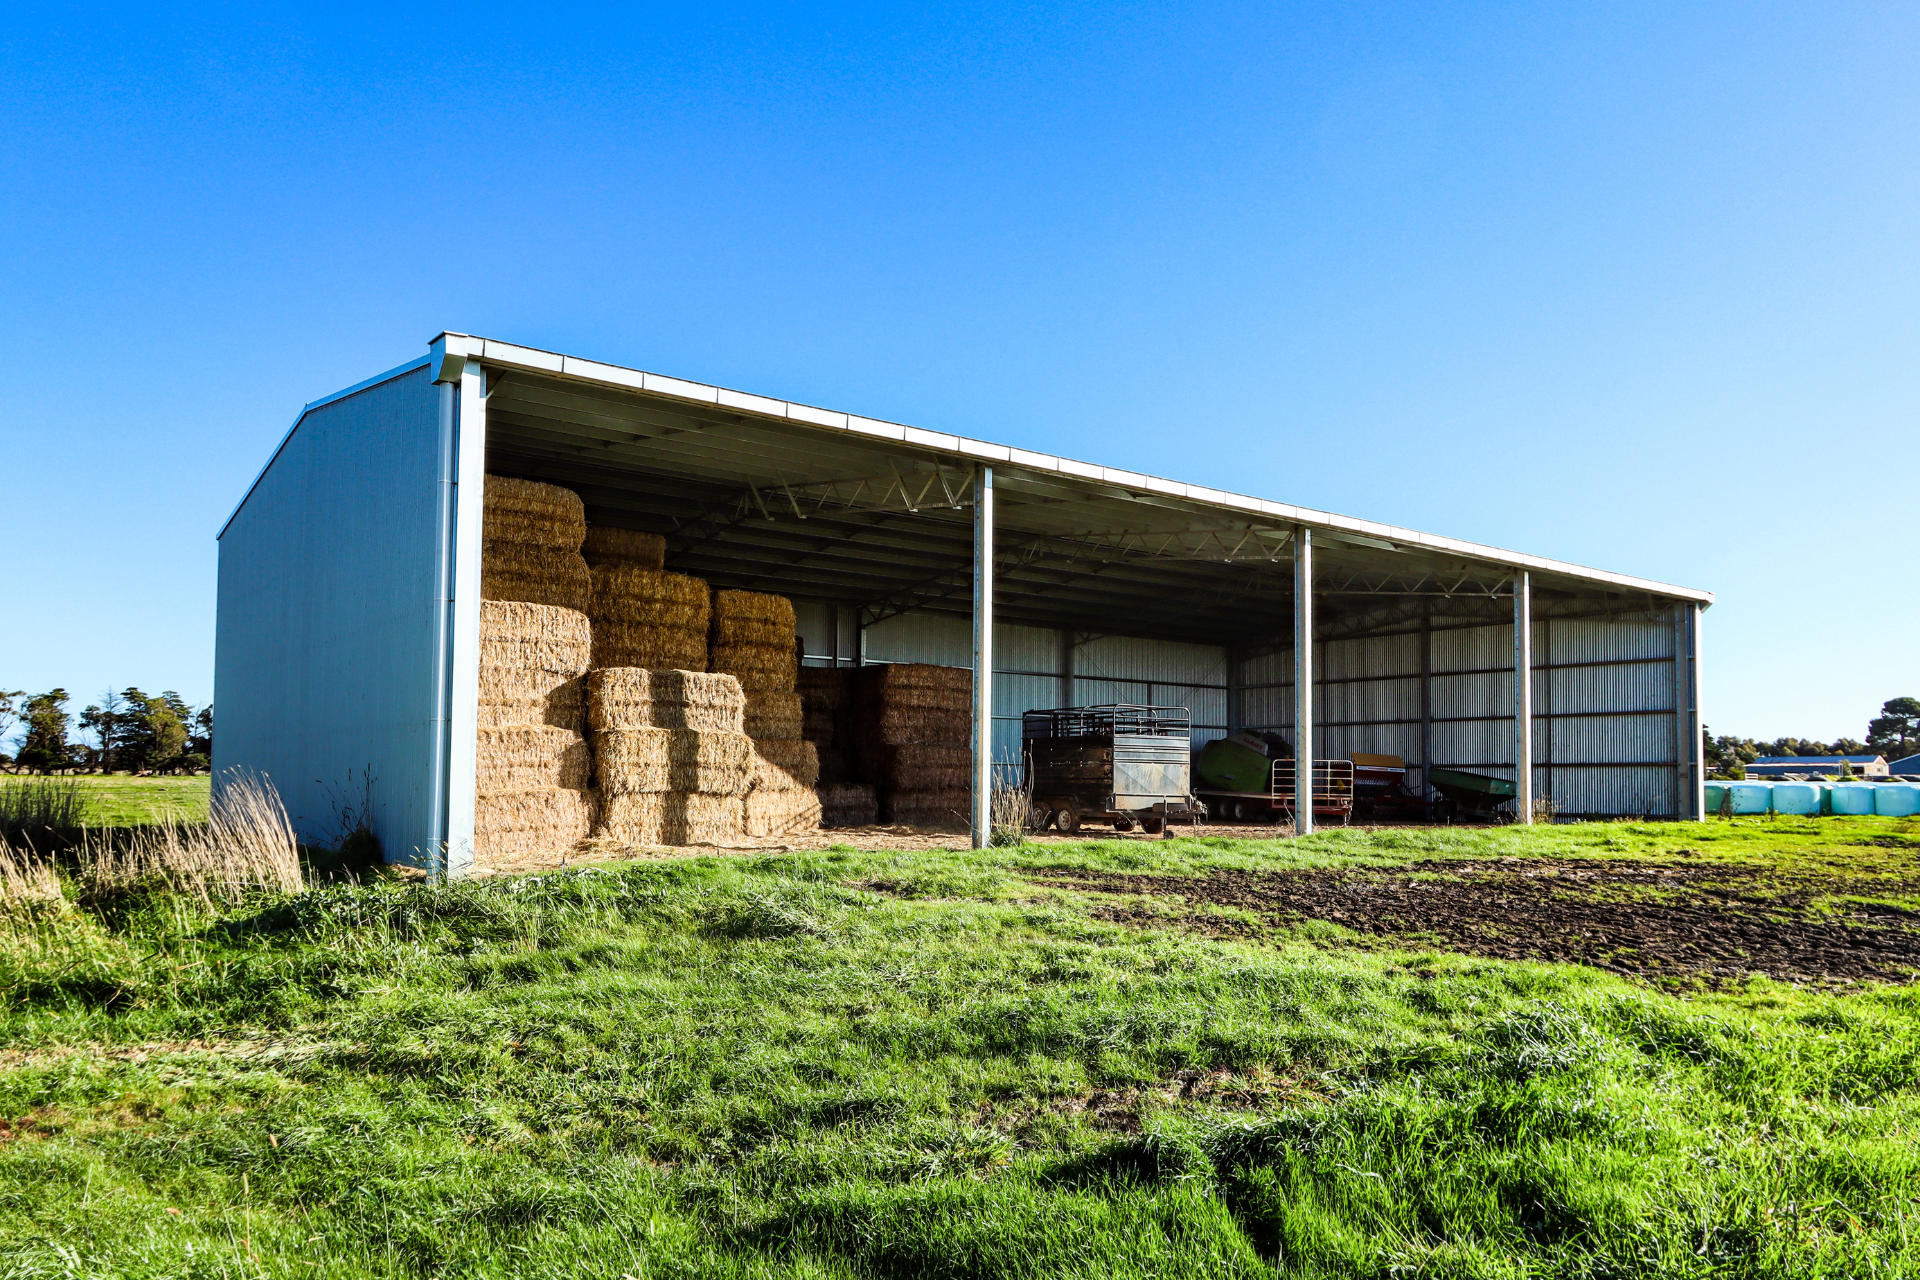 A 32m x 15m x 6m hay shed at Carranballac VIC